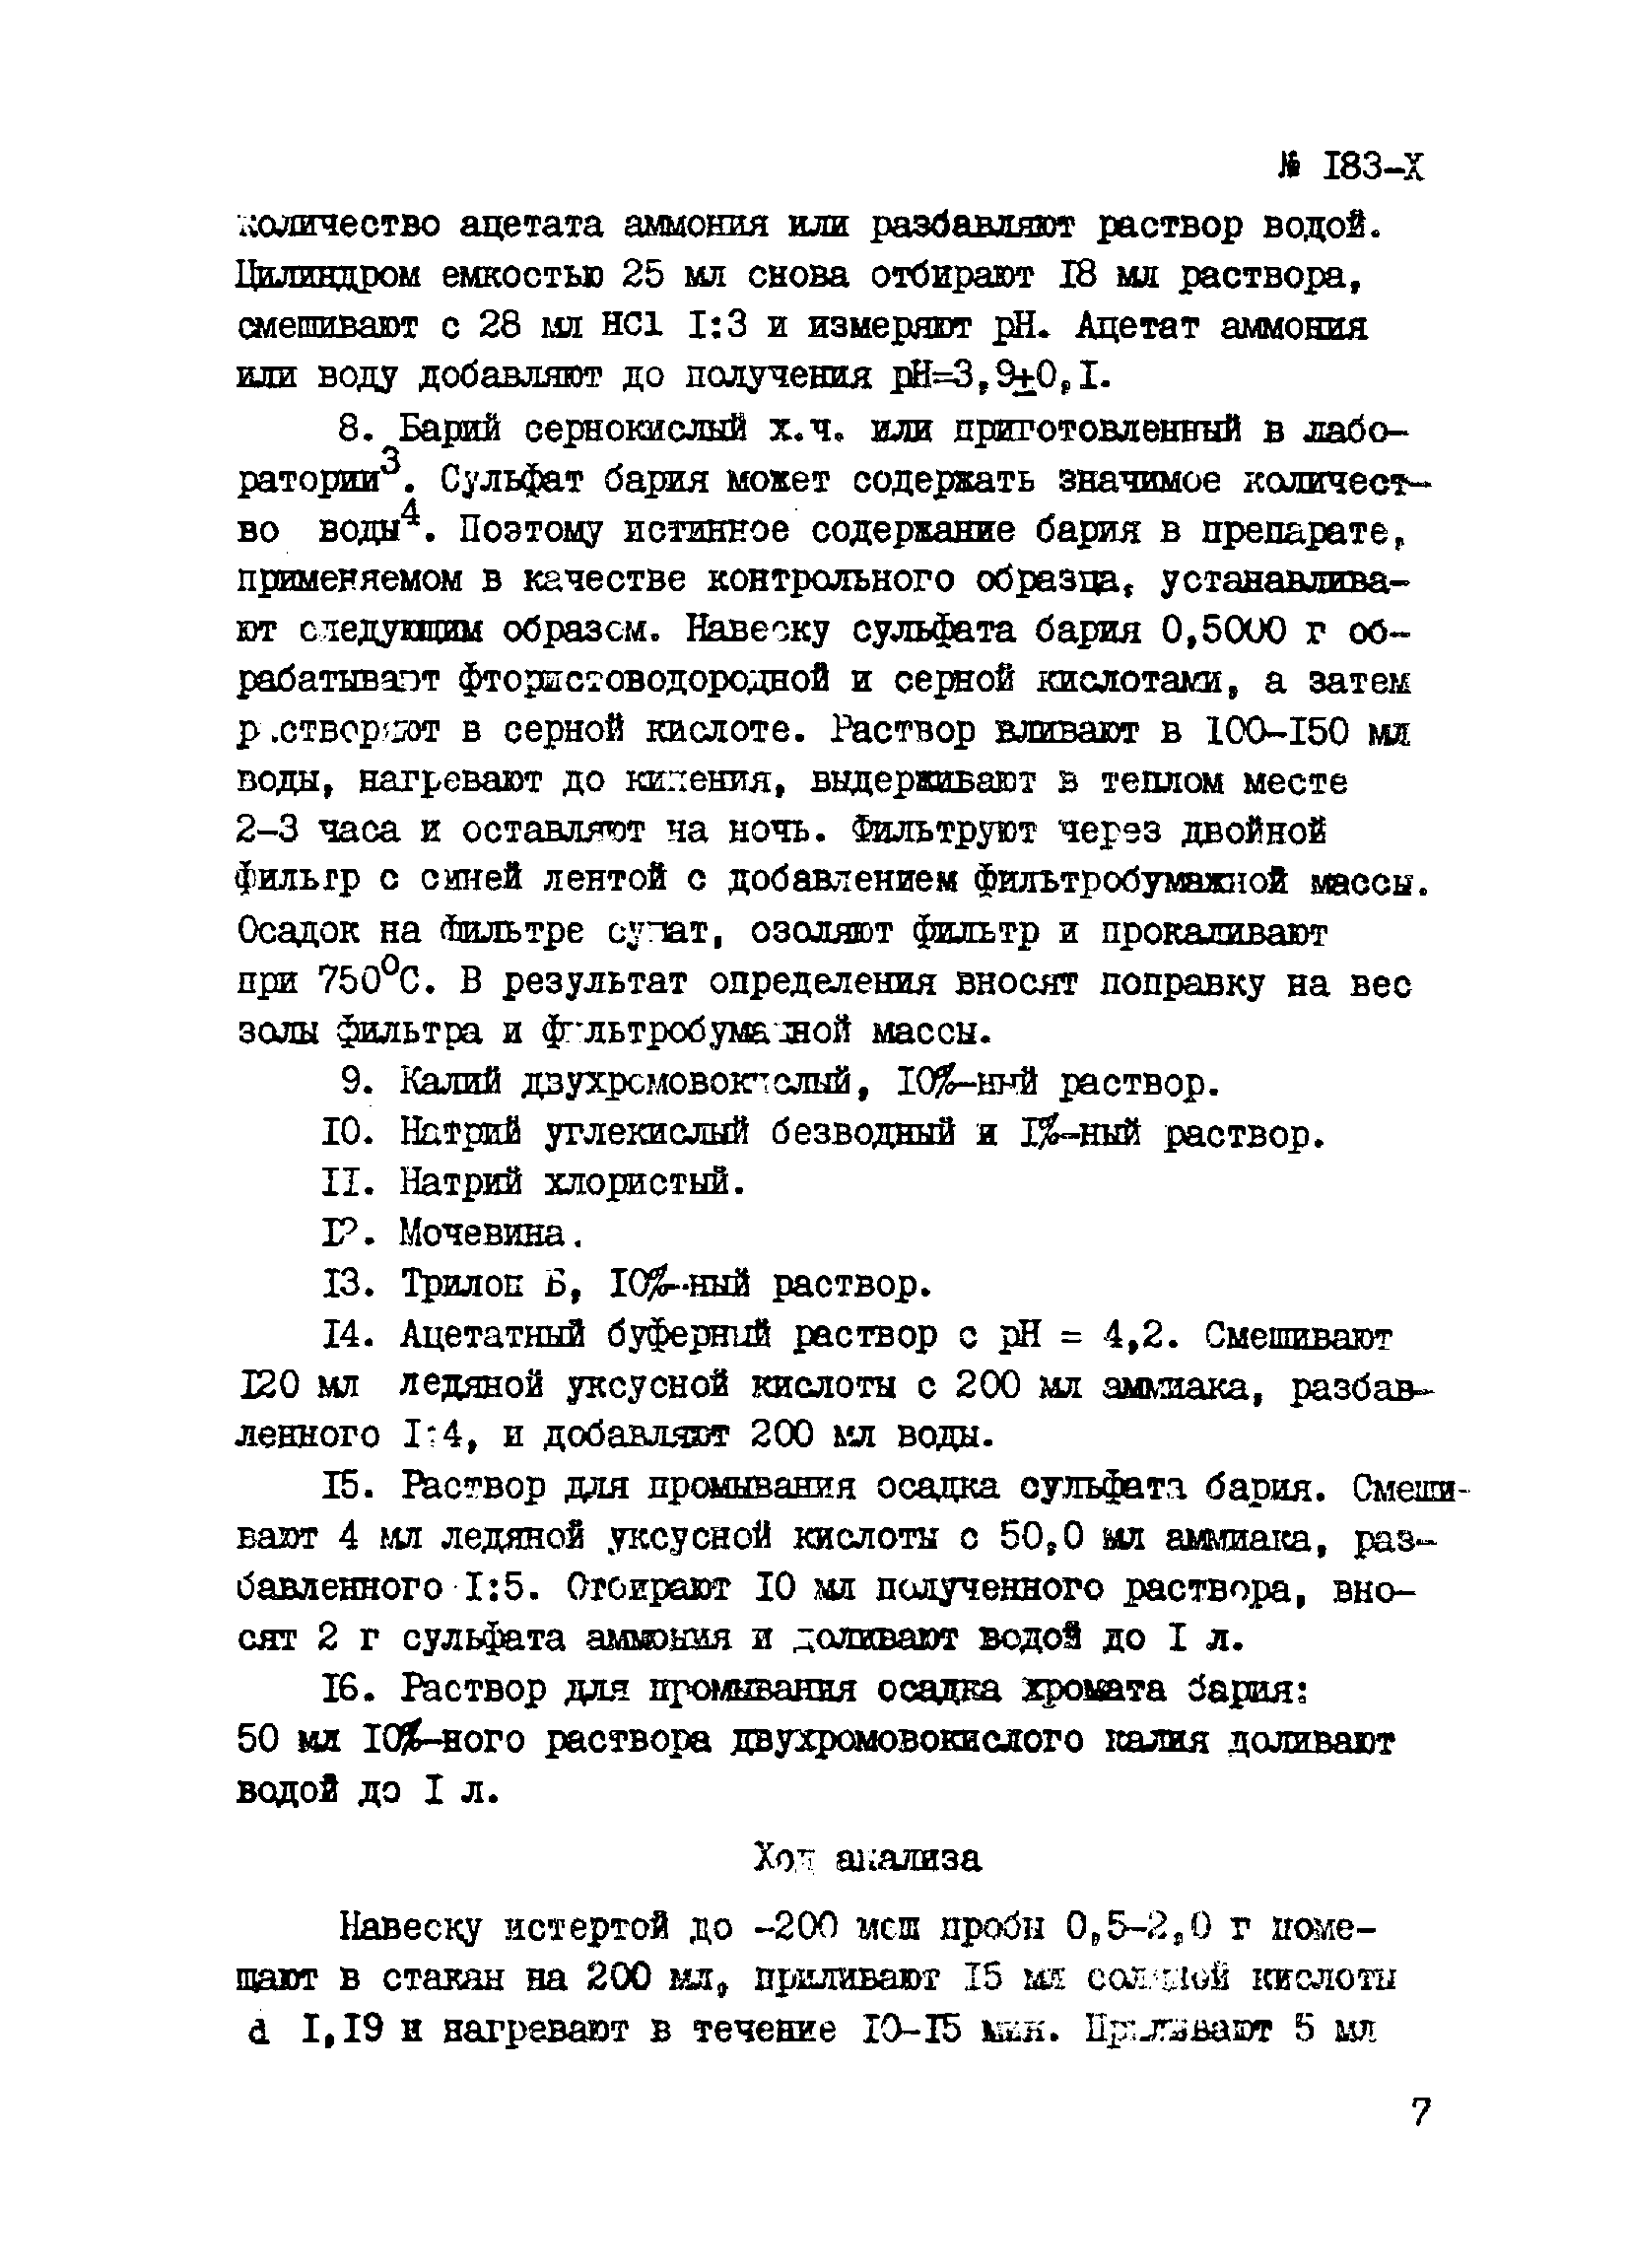 Инструкция НСАМ 183-Х